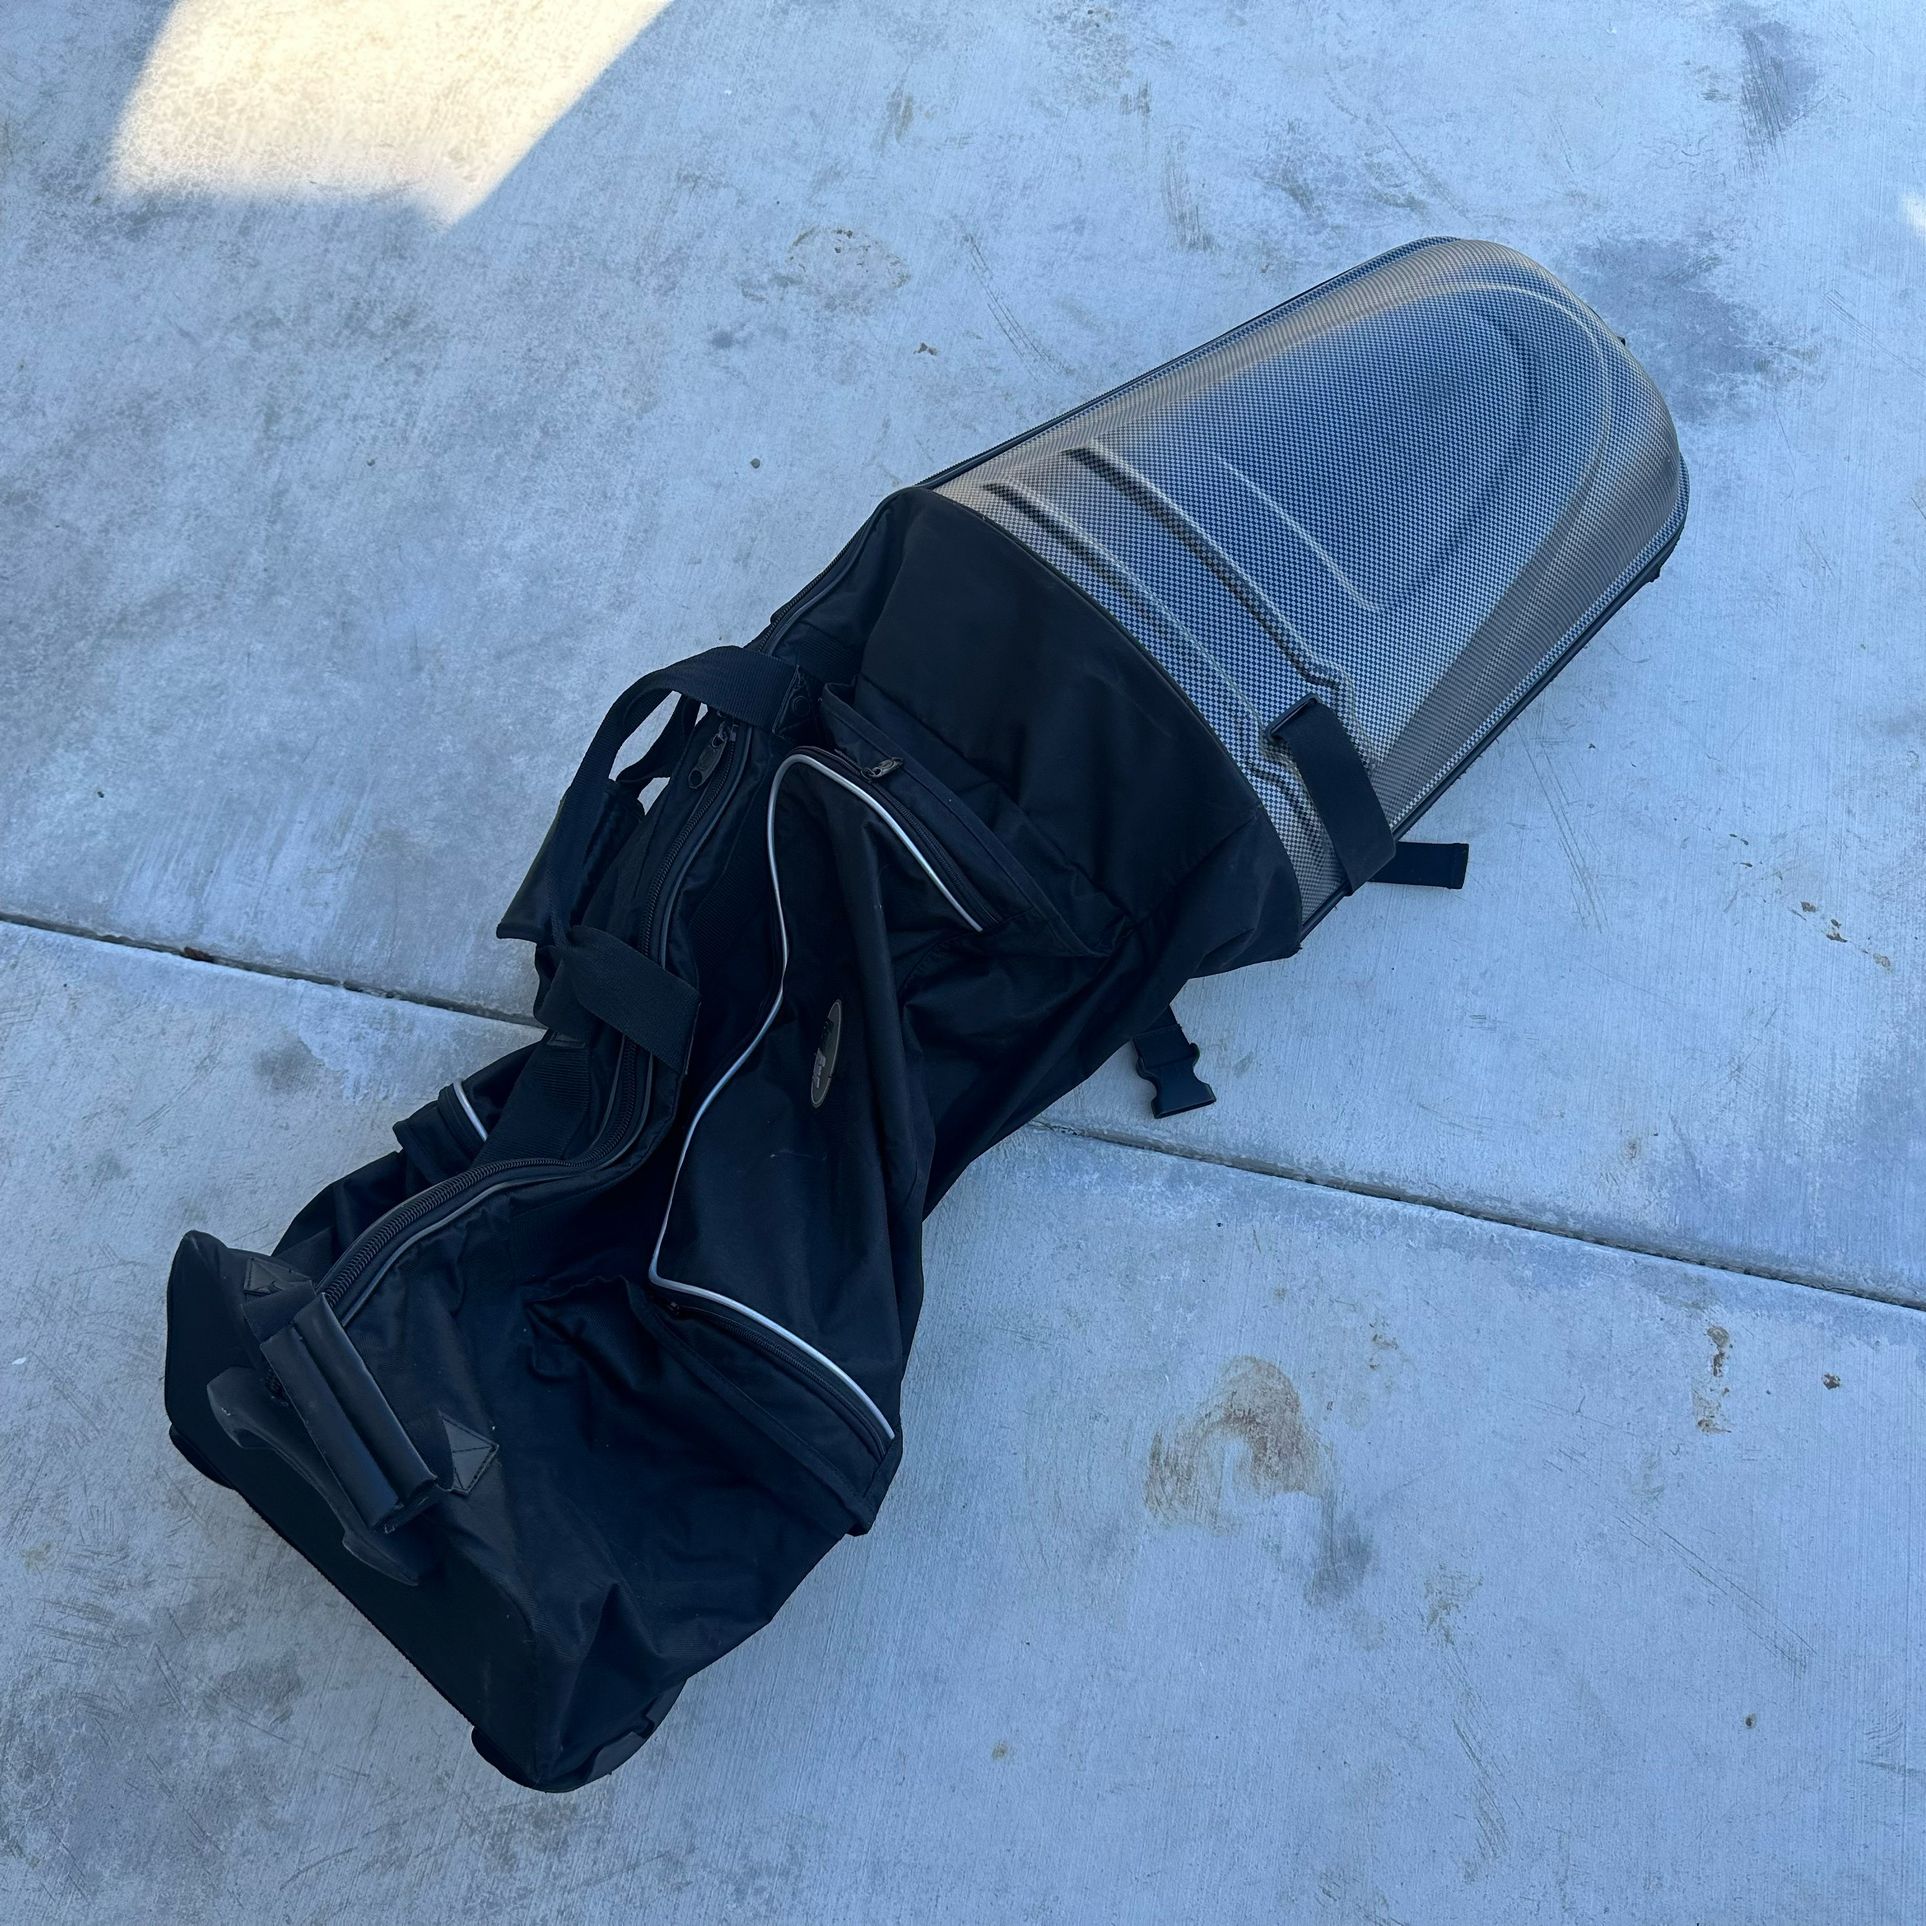 Bag Boy Golf Rolling Travel Luggage Protective Case Bag